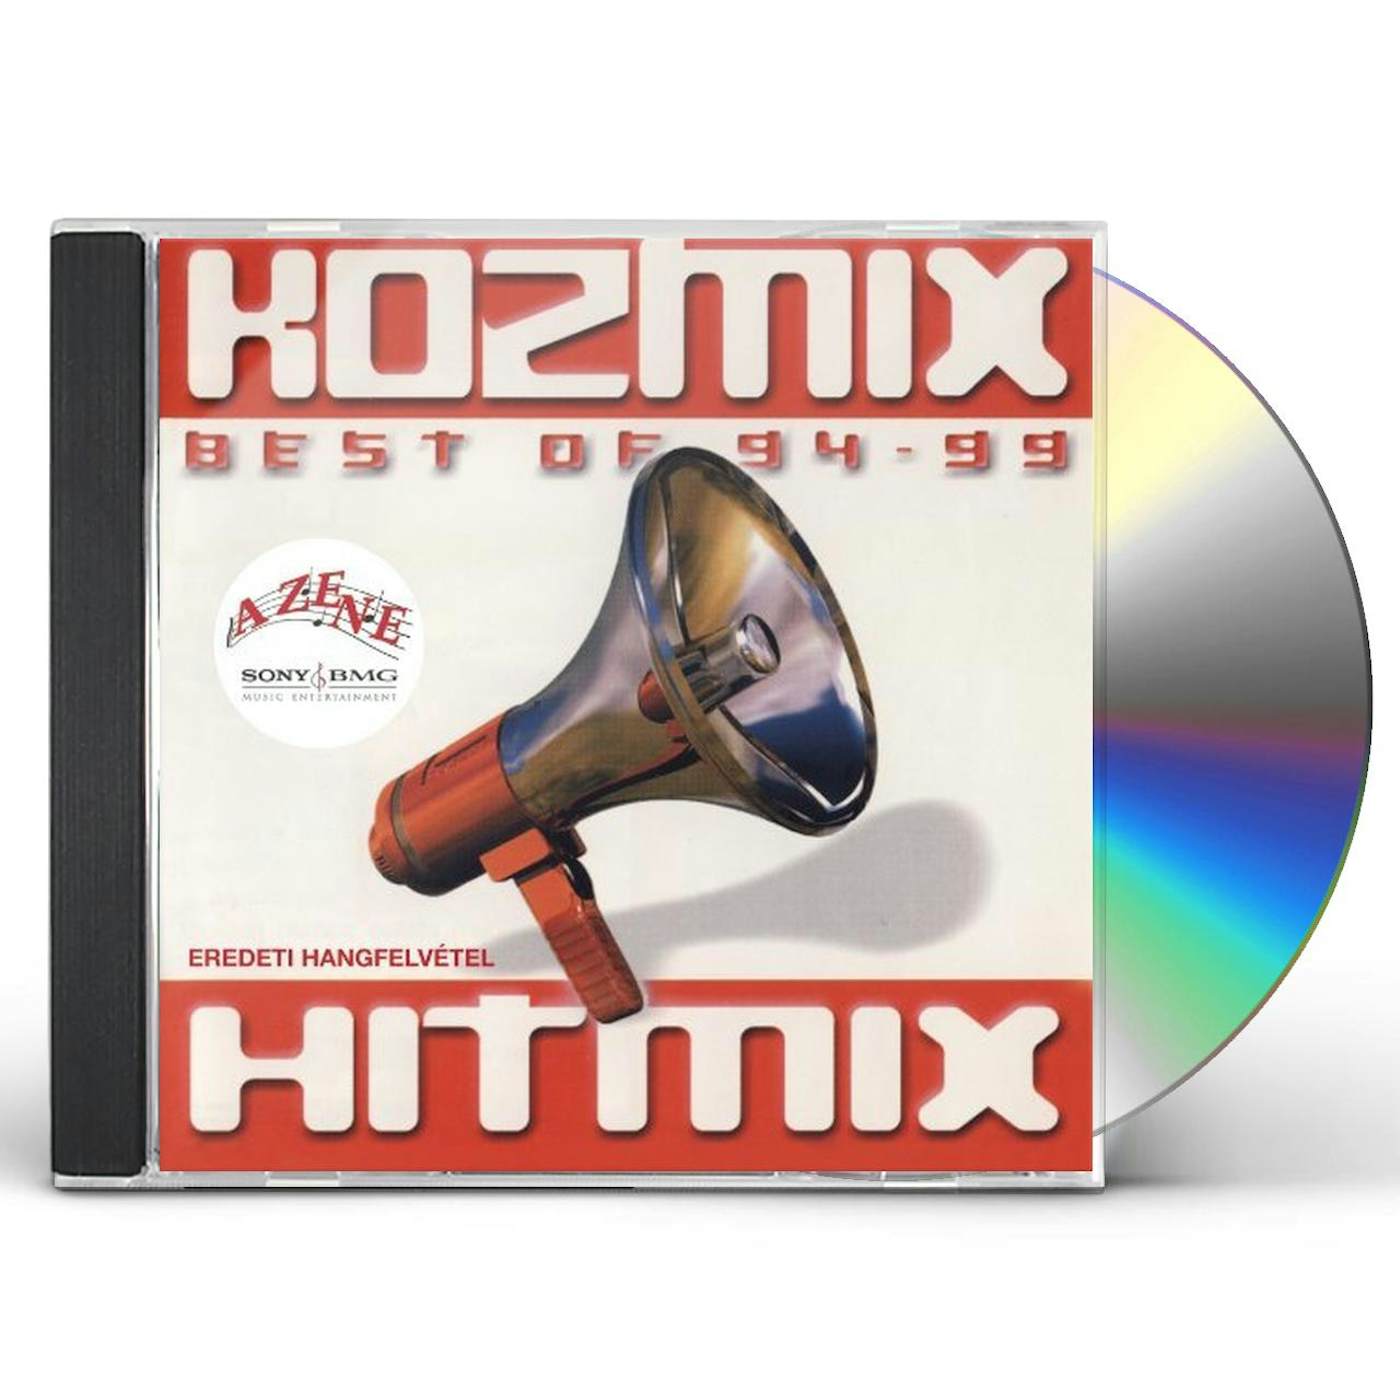 Kozmix BEST OF CD